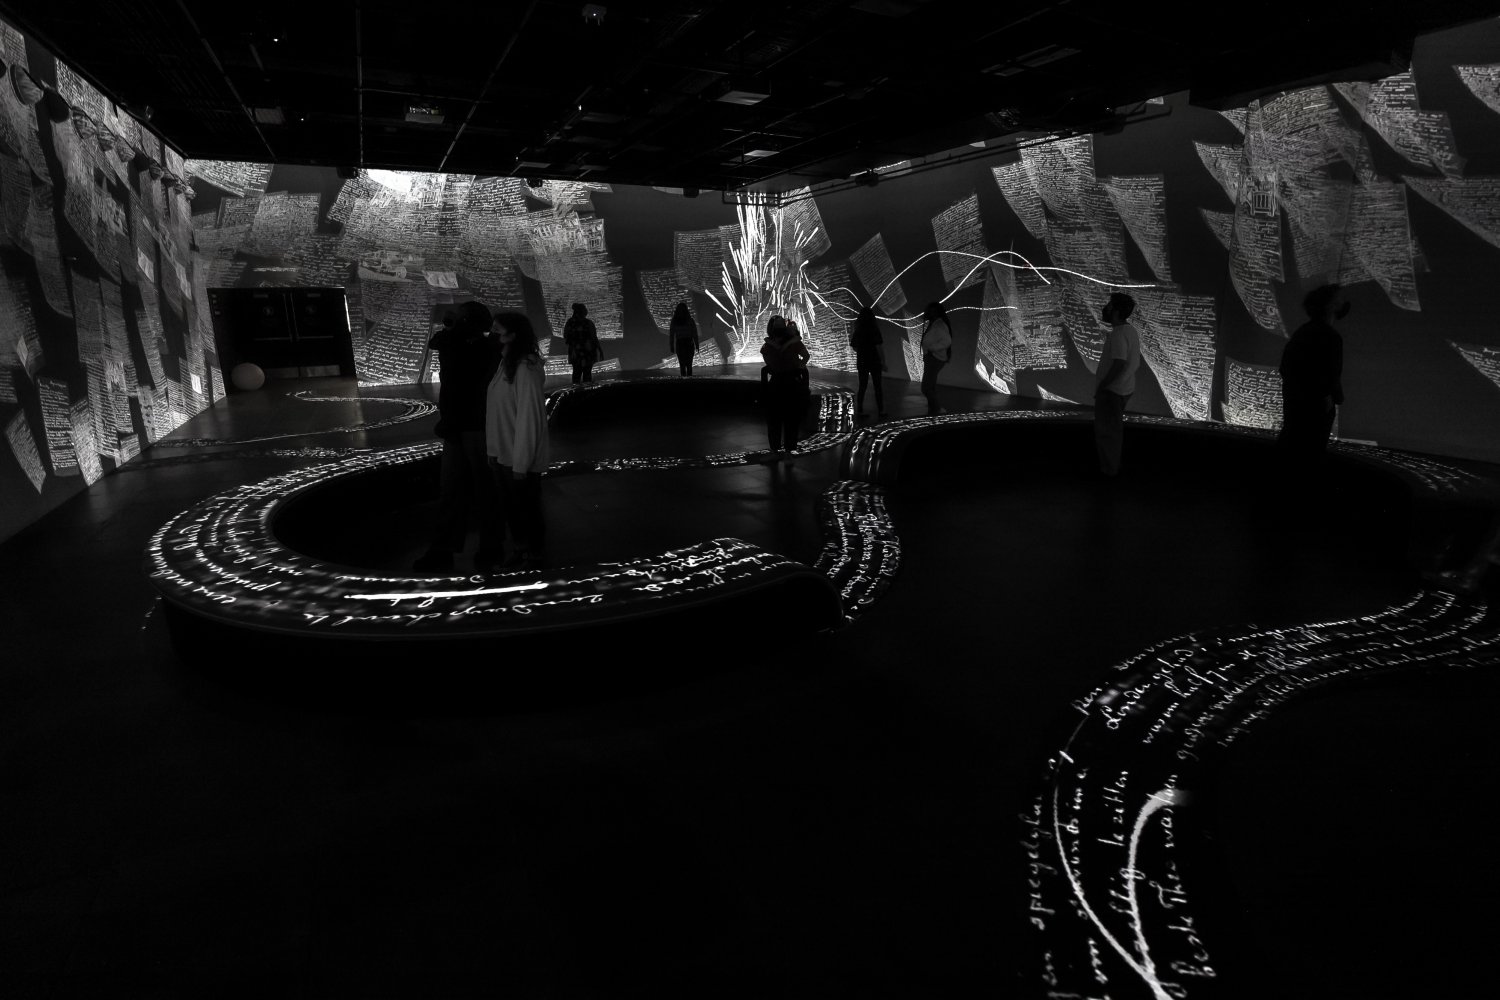 exposition immersive van gogh noir et blanc